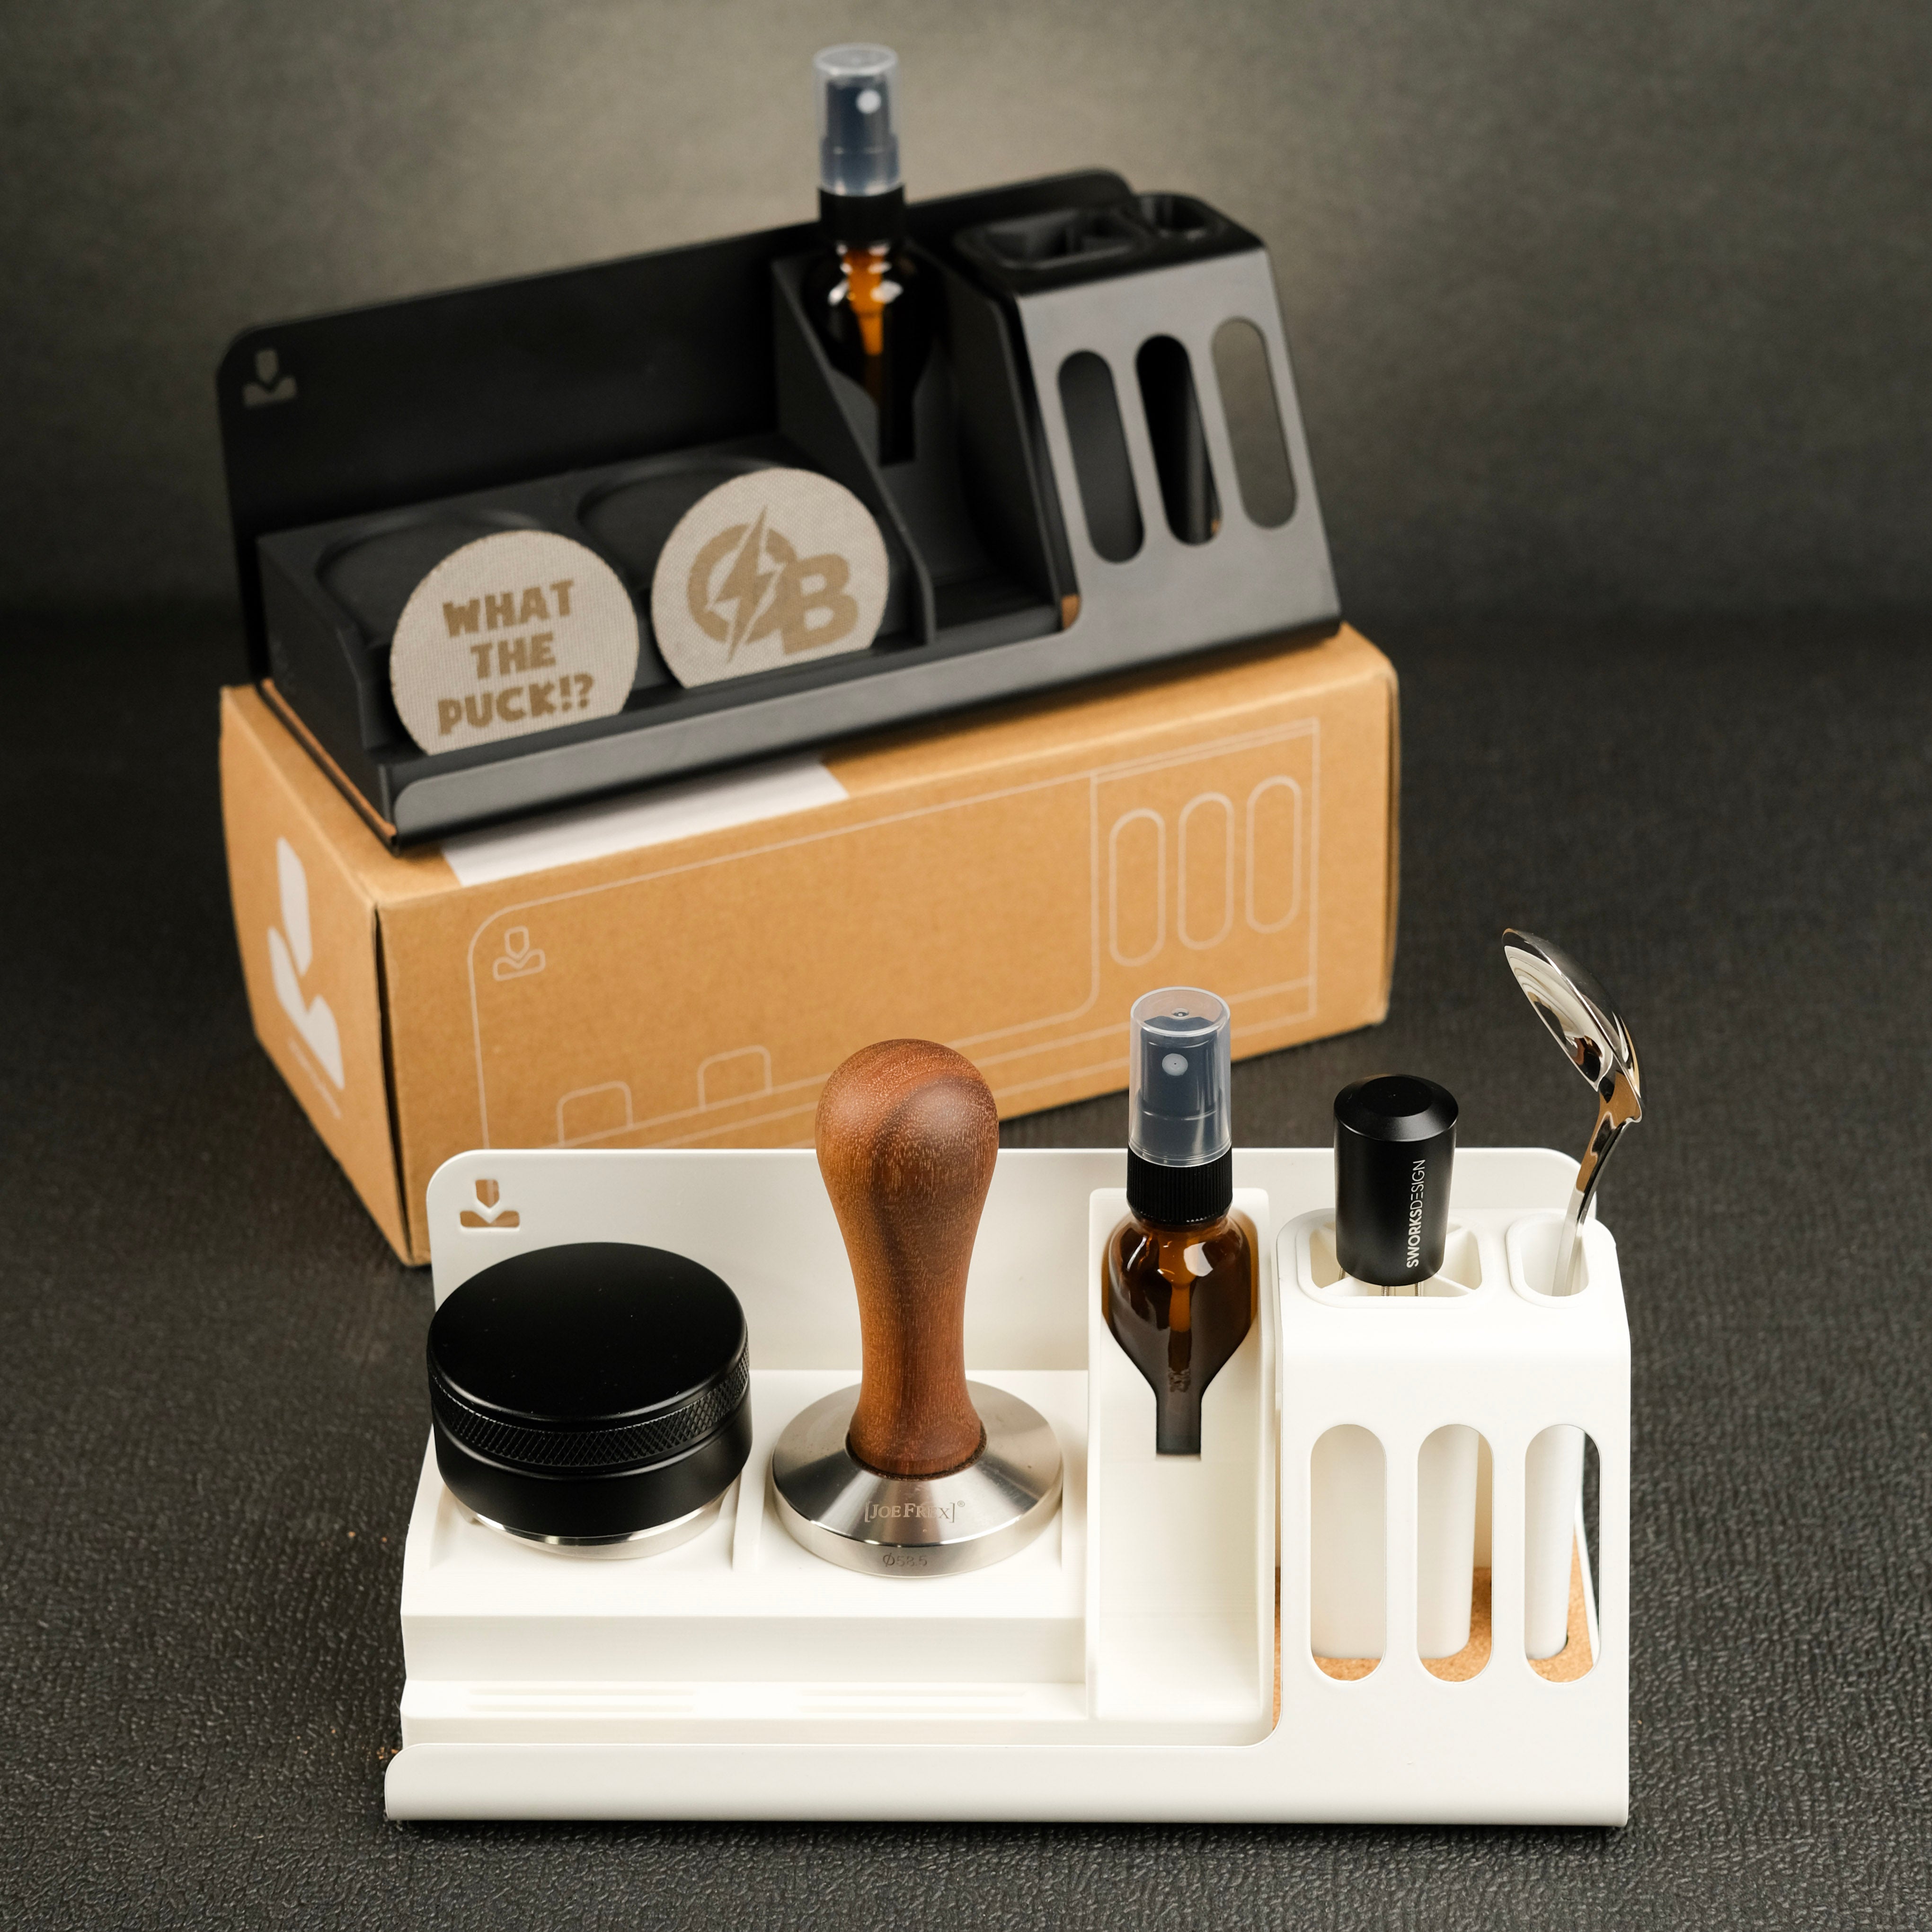 Espresso tool organizer and display stand